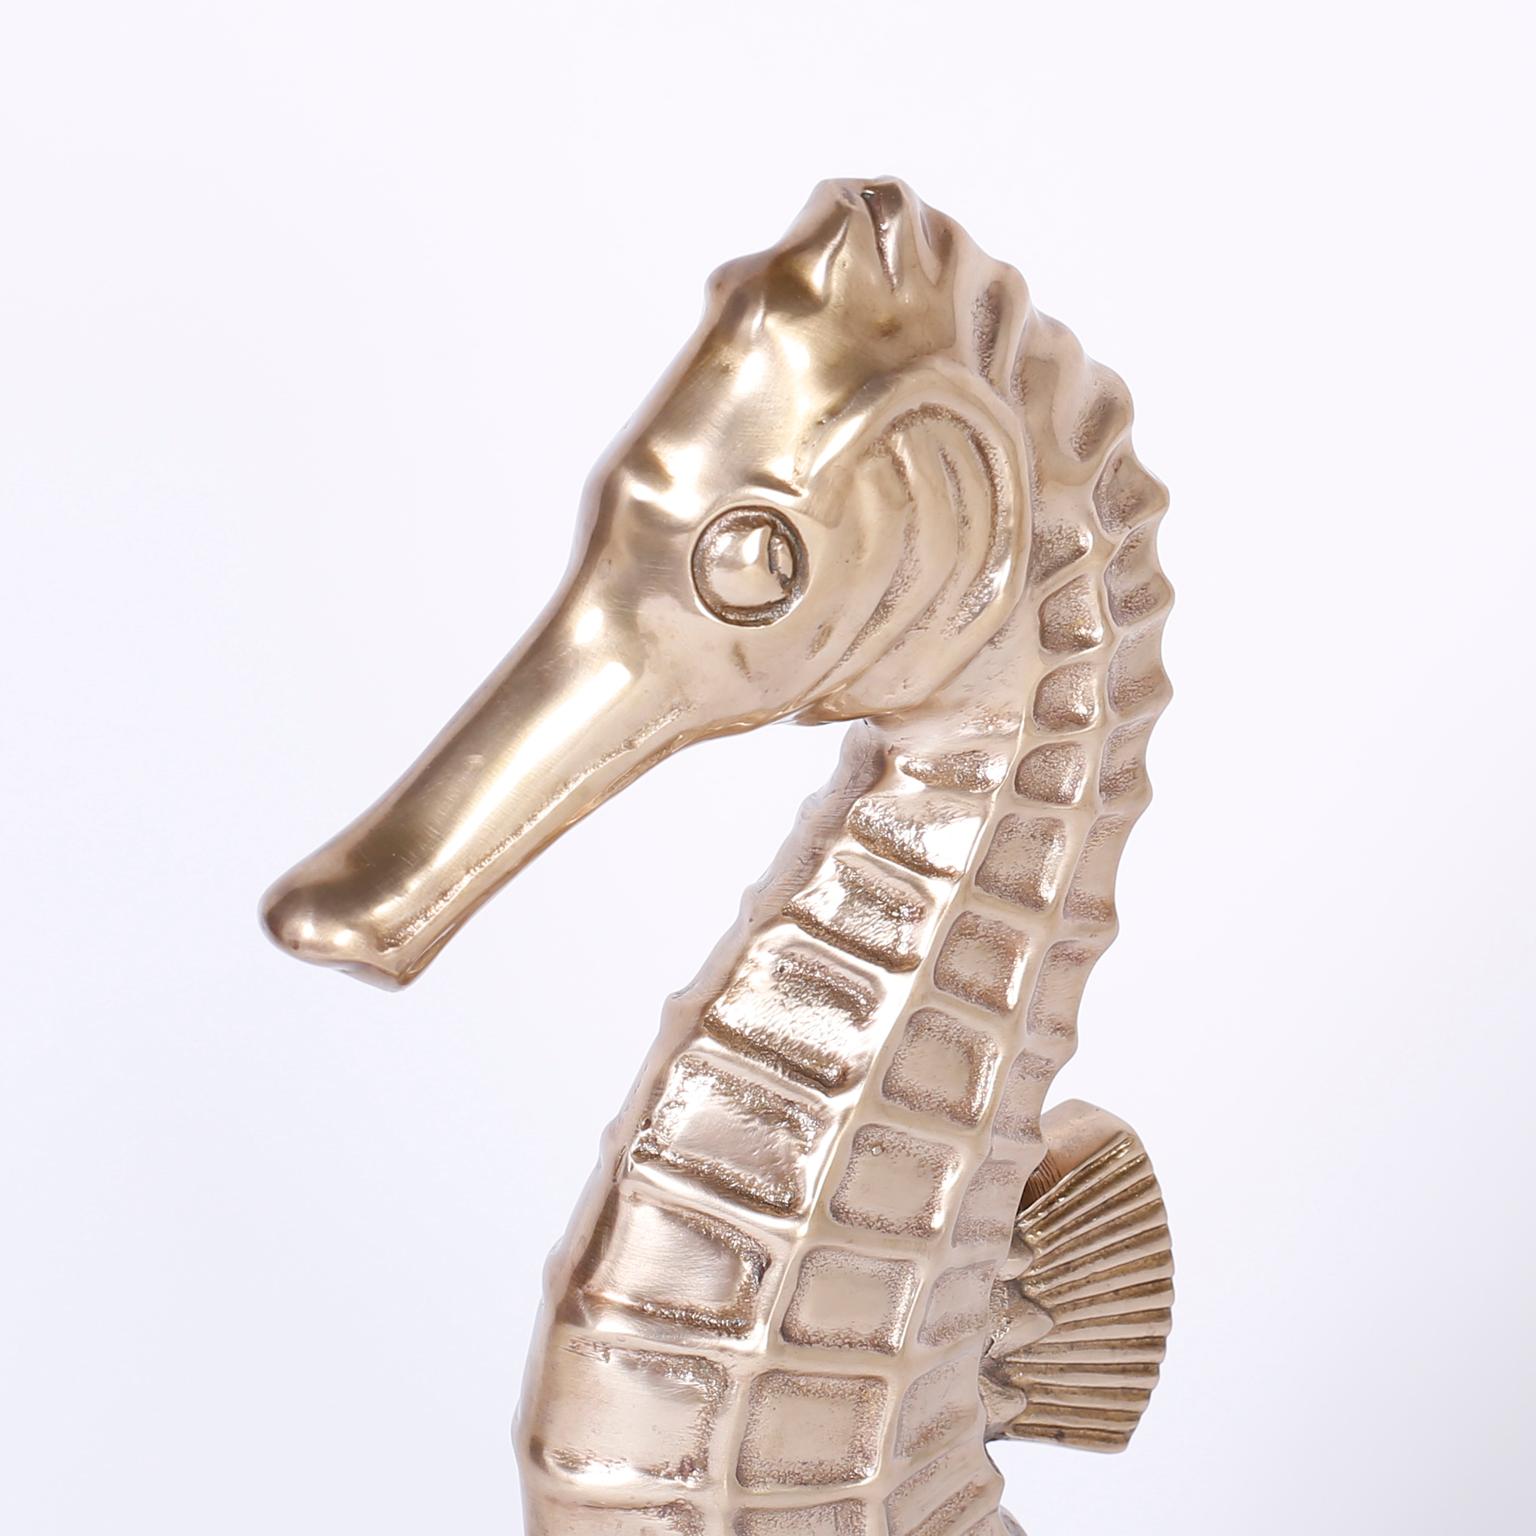 American Brass Sea Horse Sculpture